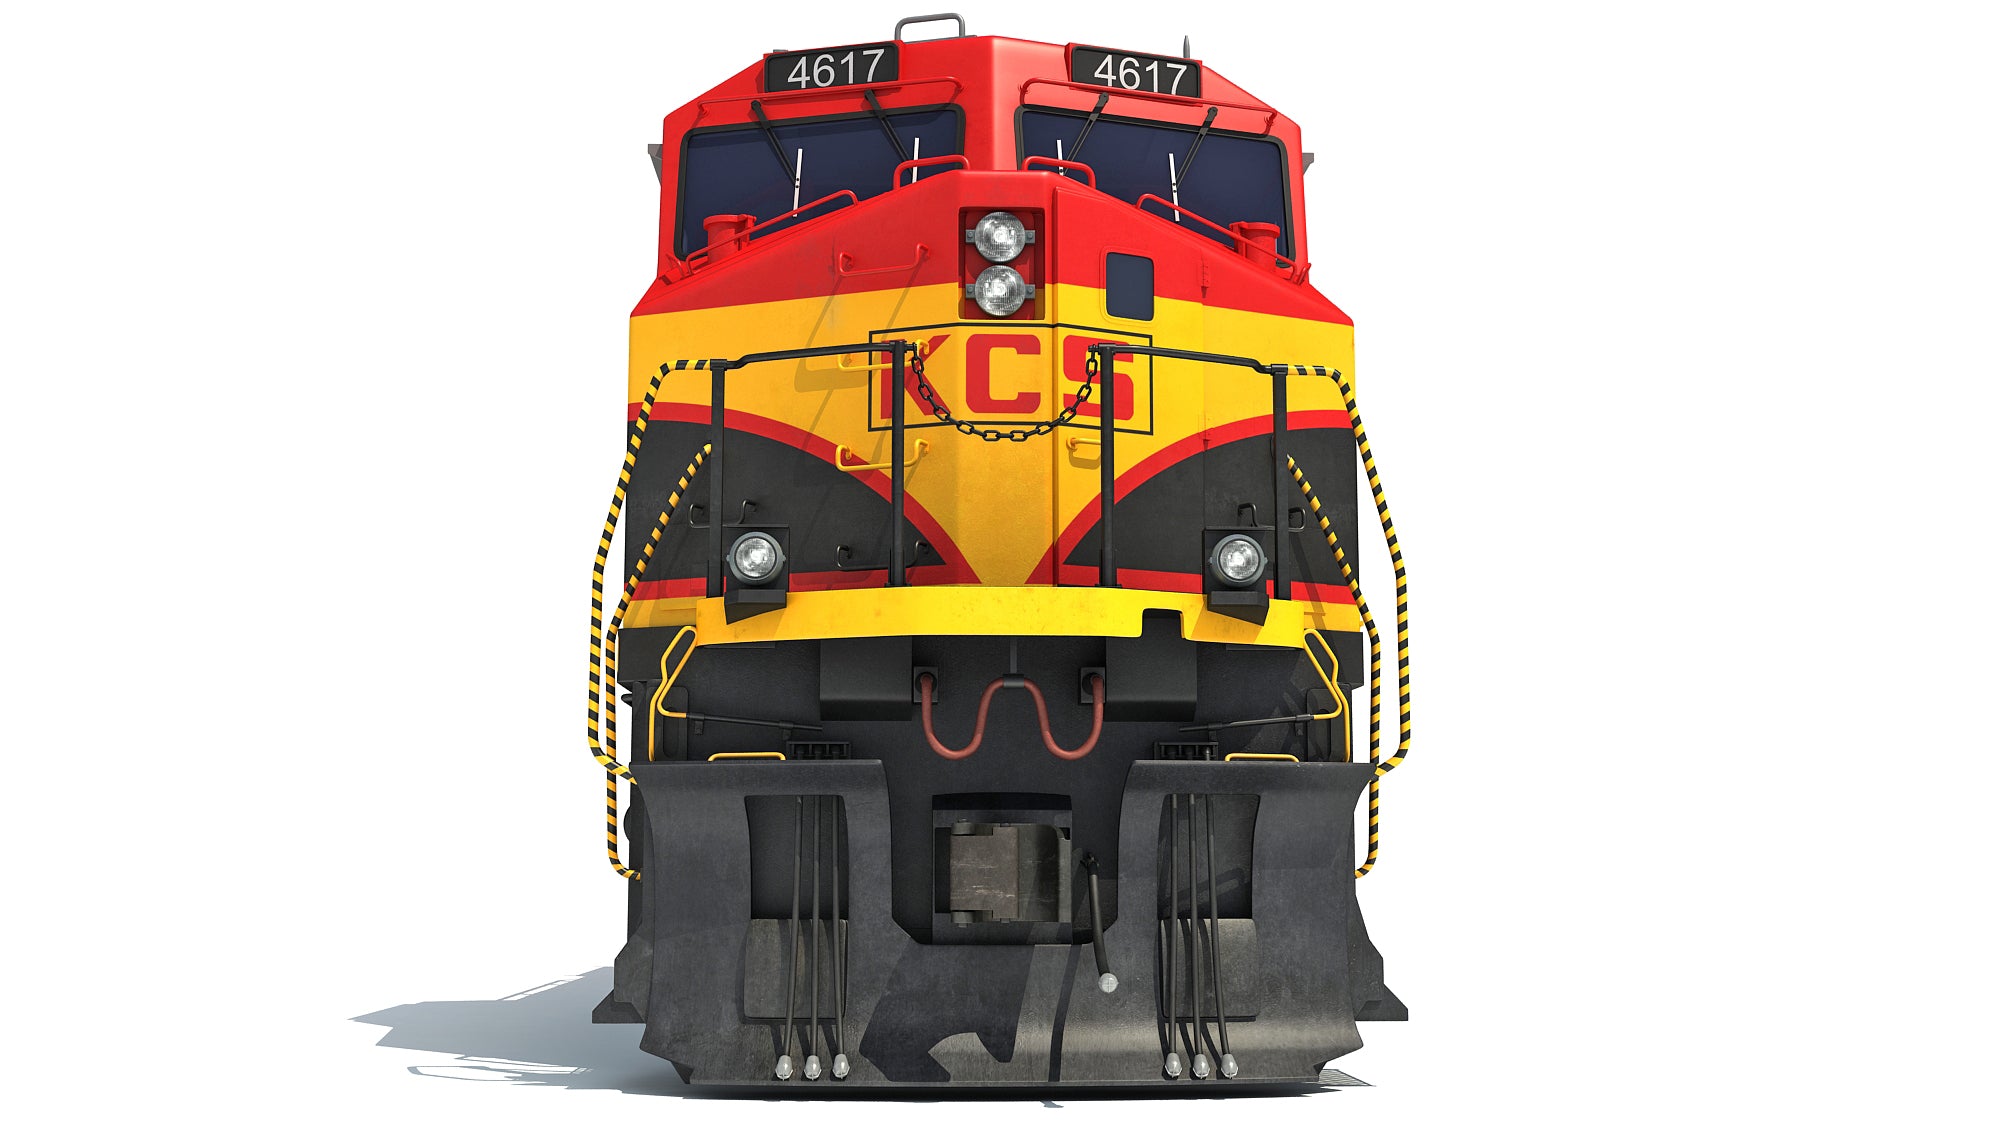 Kansas City Southern Locomotive